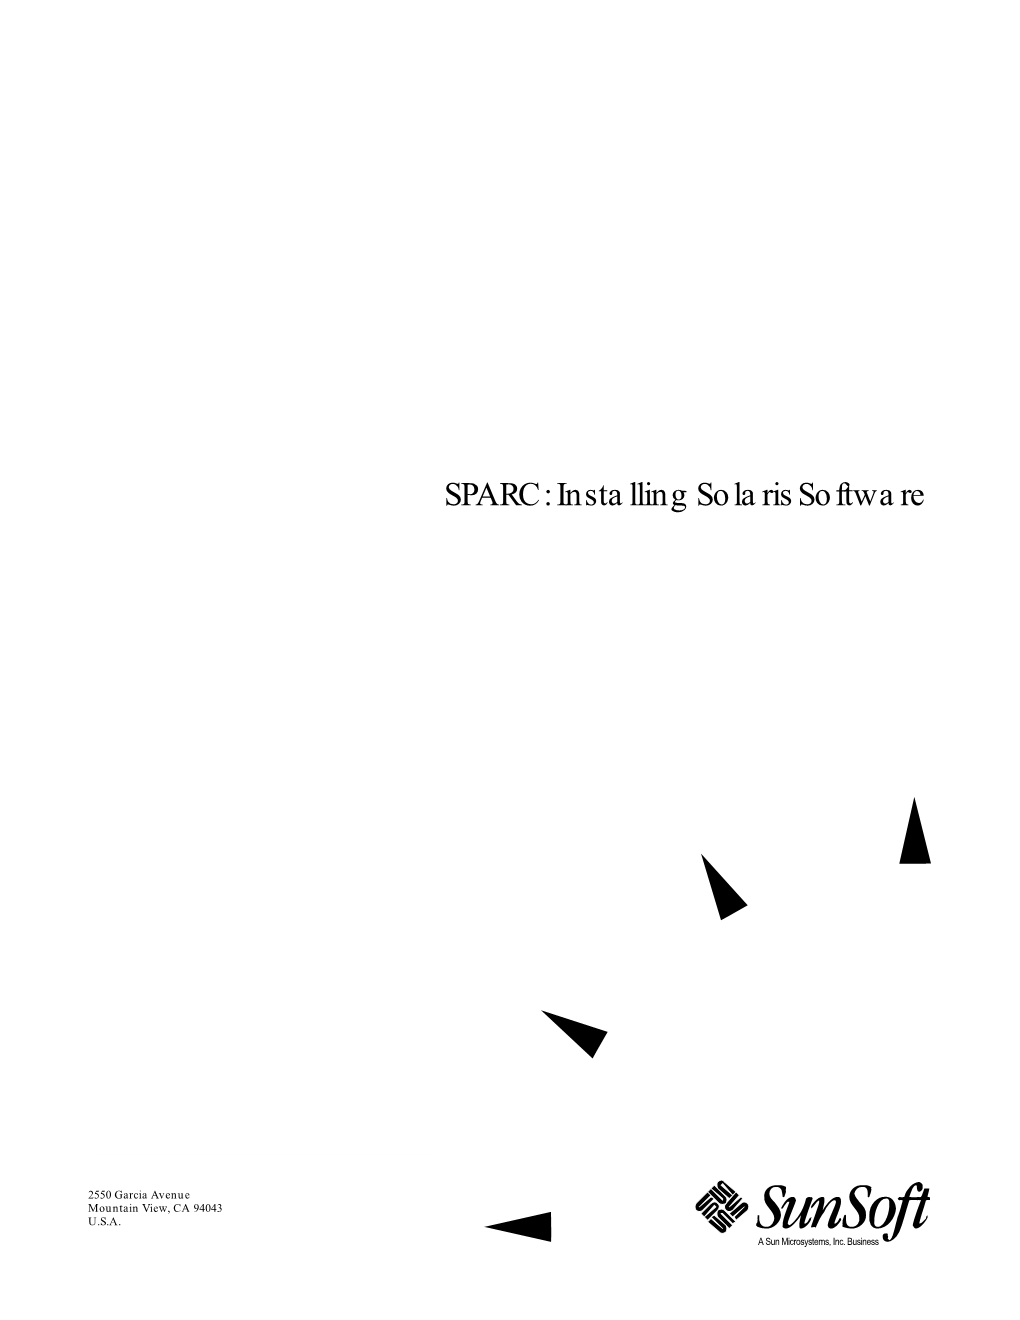 SPARC: Installing Solaris Software